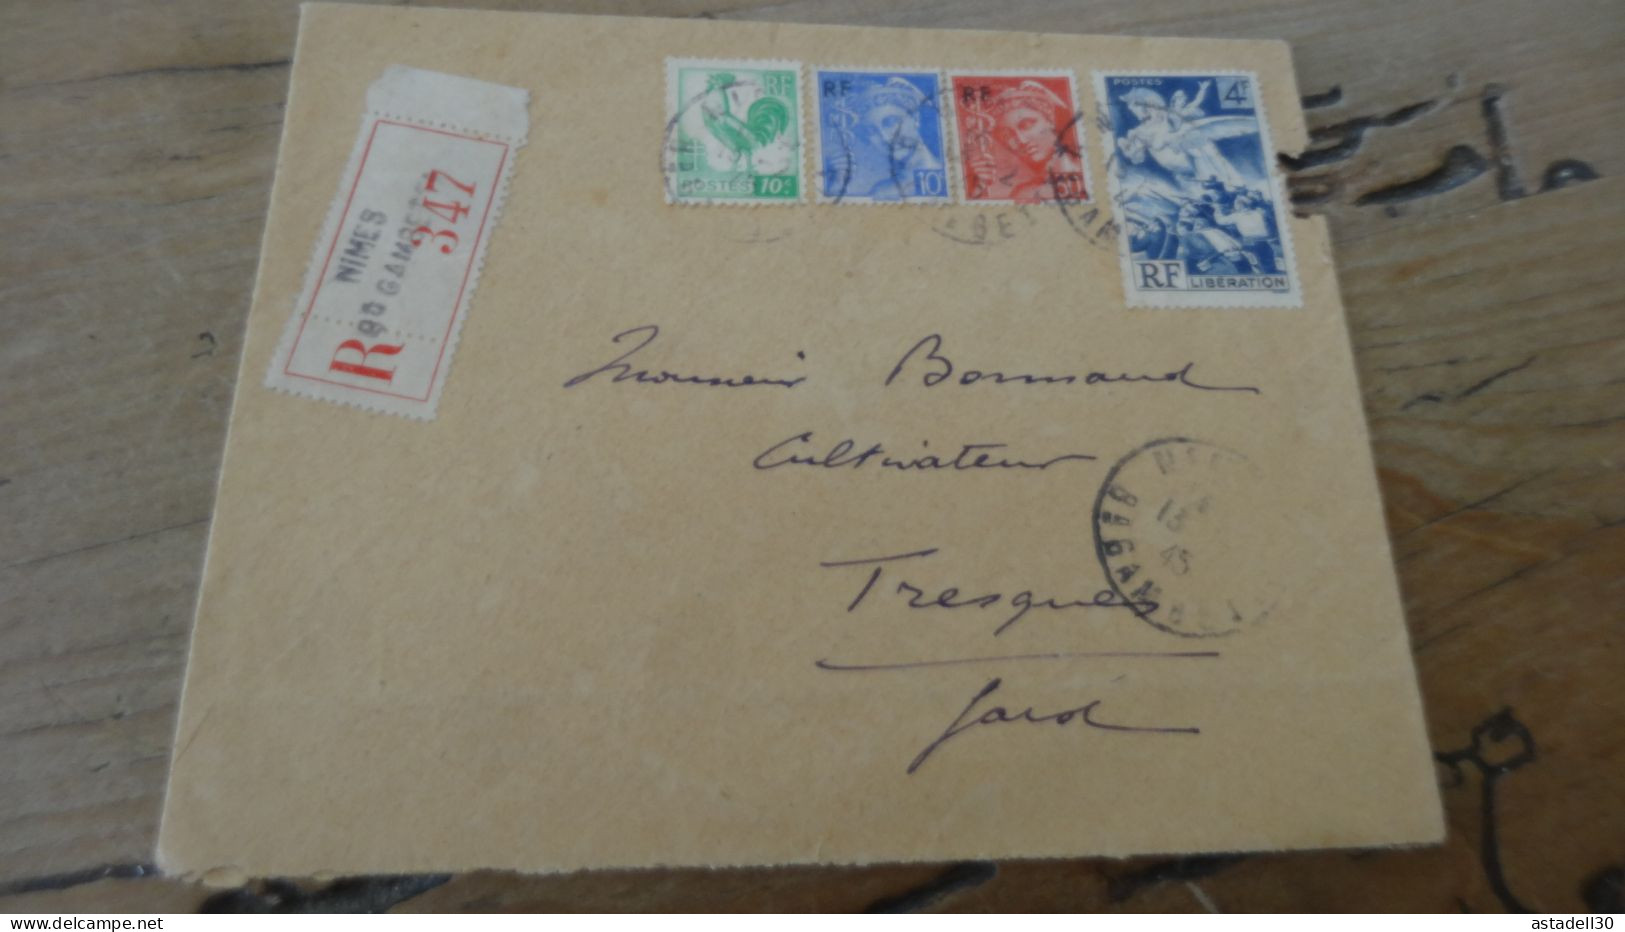 Enveloppe Recommandée NIMES 1945  ............. BOITE1  ....... 544 - 1921-1960: Modern Tijdperk